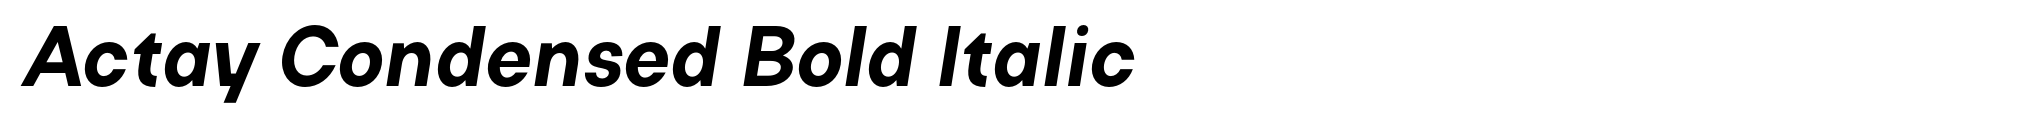 Actay Condensed Bold Italic image